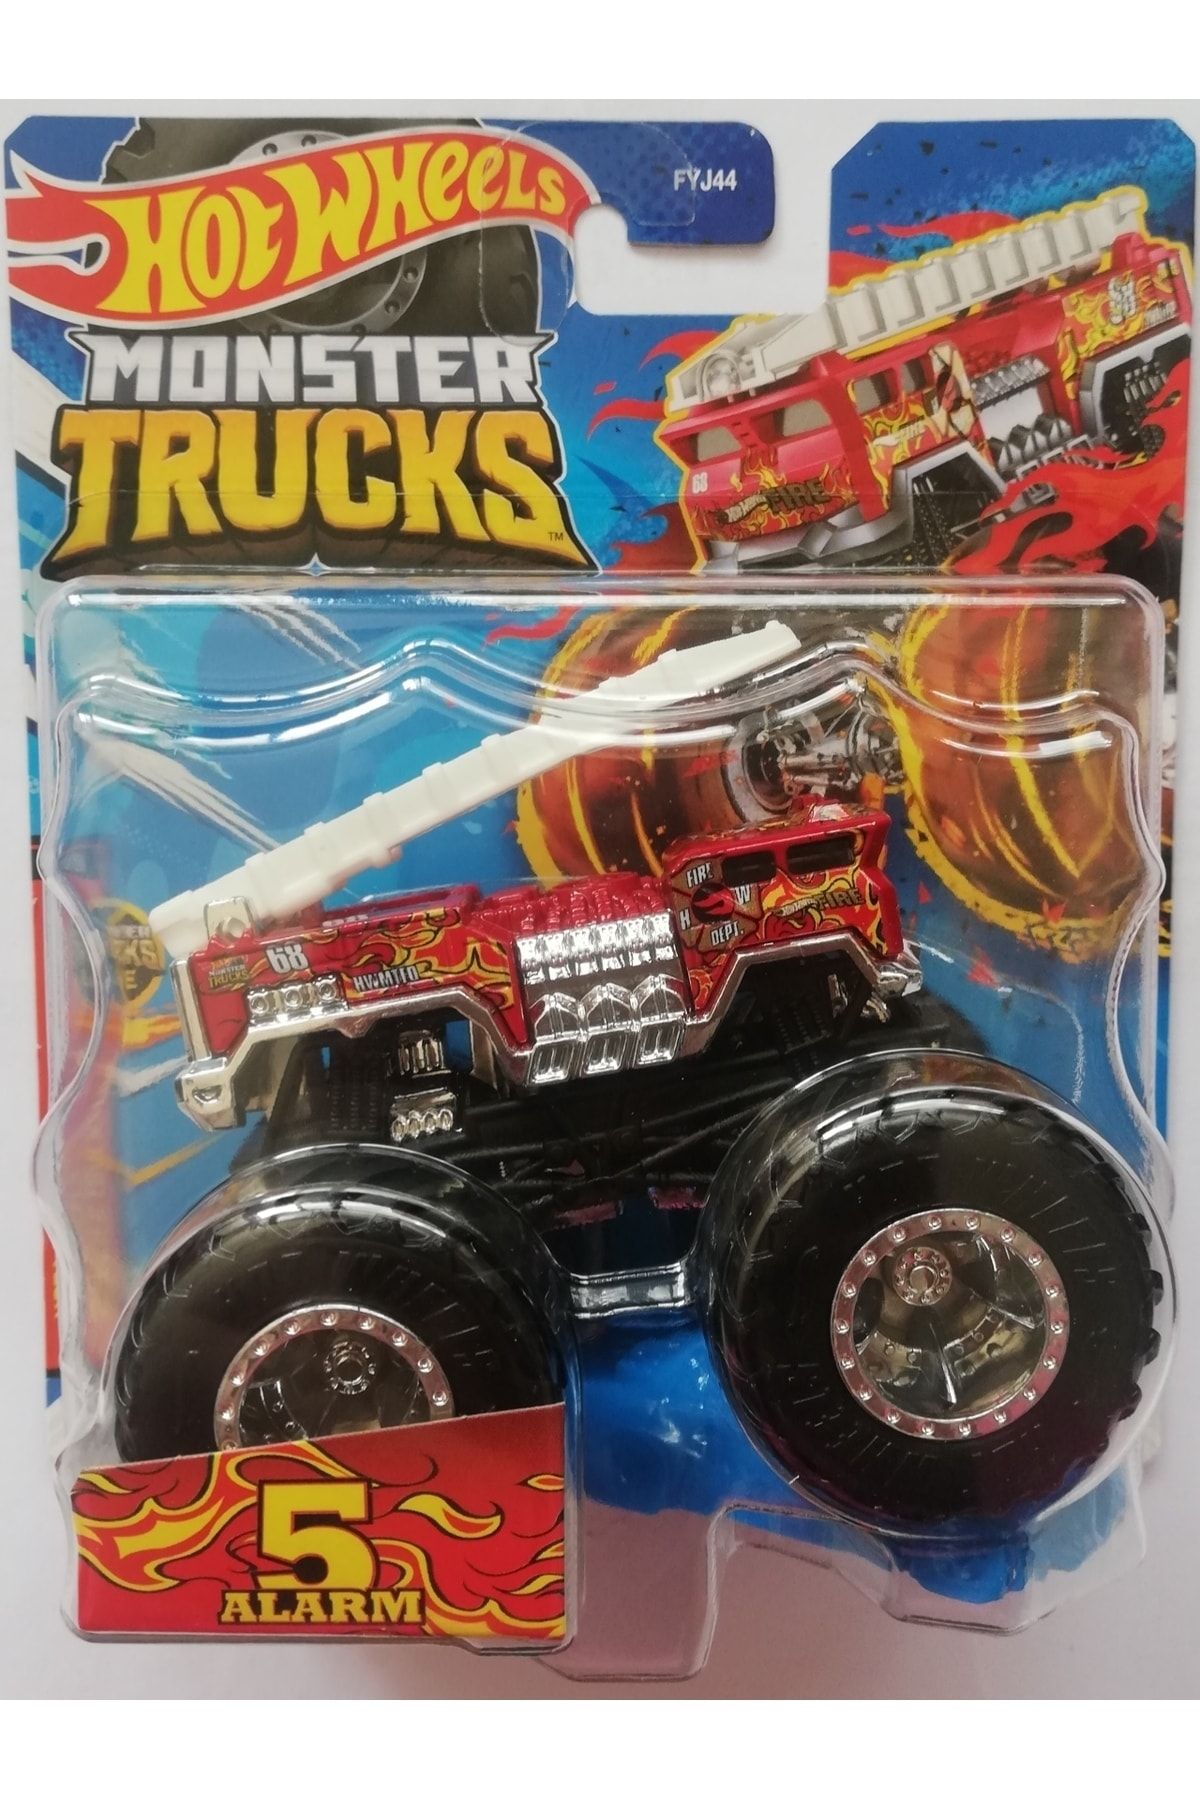 HOT WHEELS Monster Trucks Toy Metal Cars 5 زنگ هشدار 1:64